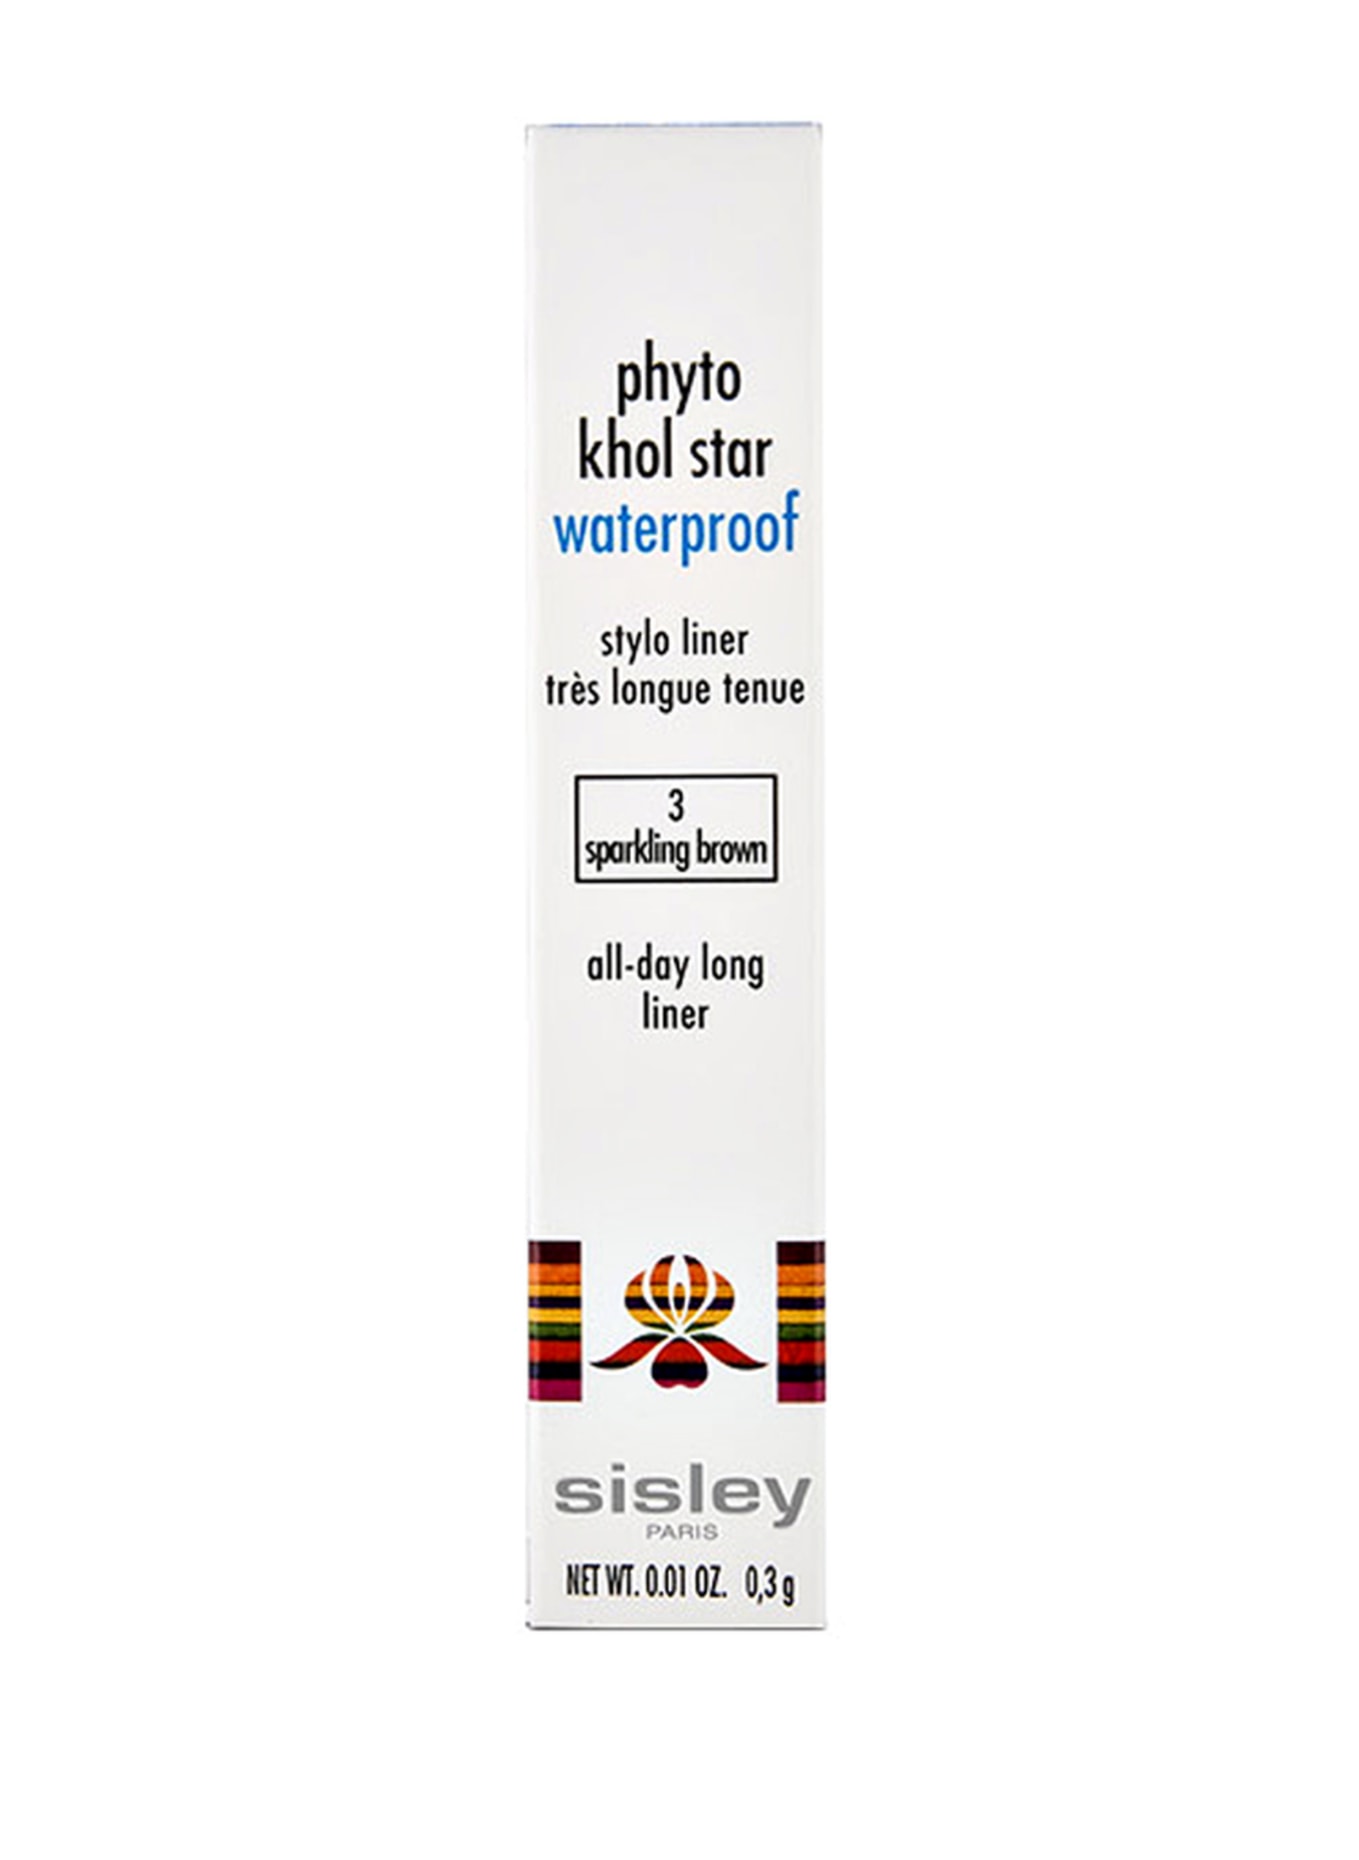 sisley Paris PHYTO-KHOL STAR WATERPROOF, Farbe: 3 SPRAKLING BROWN (Bild 2)